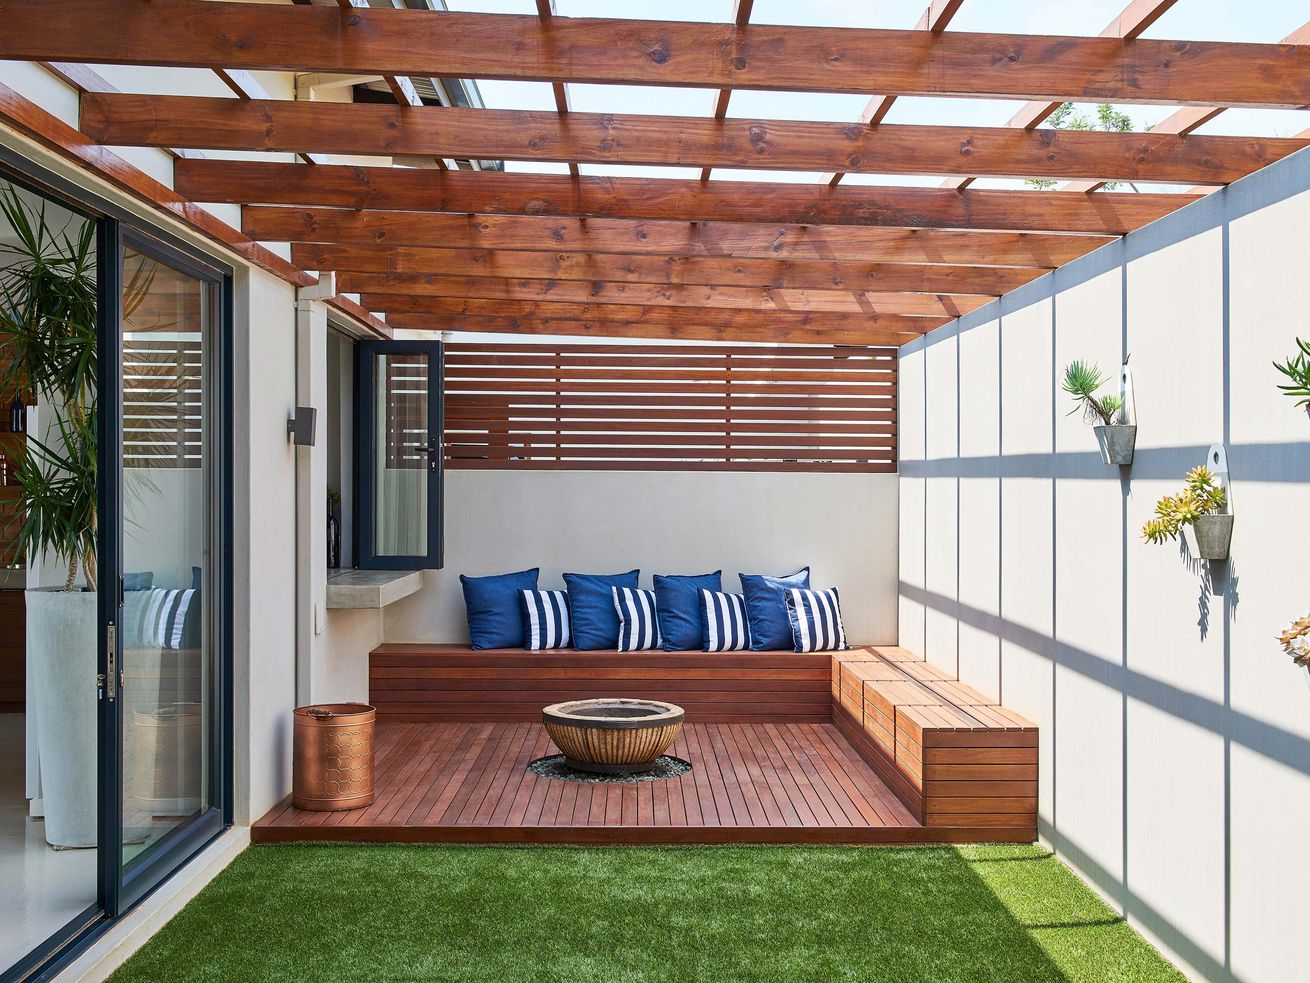 16 Pergola Ideas to Enhance Your Backyard